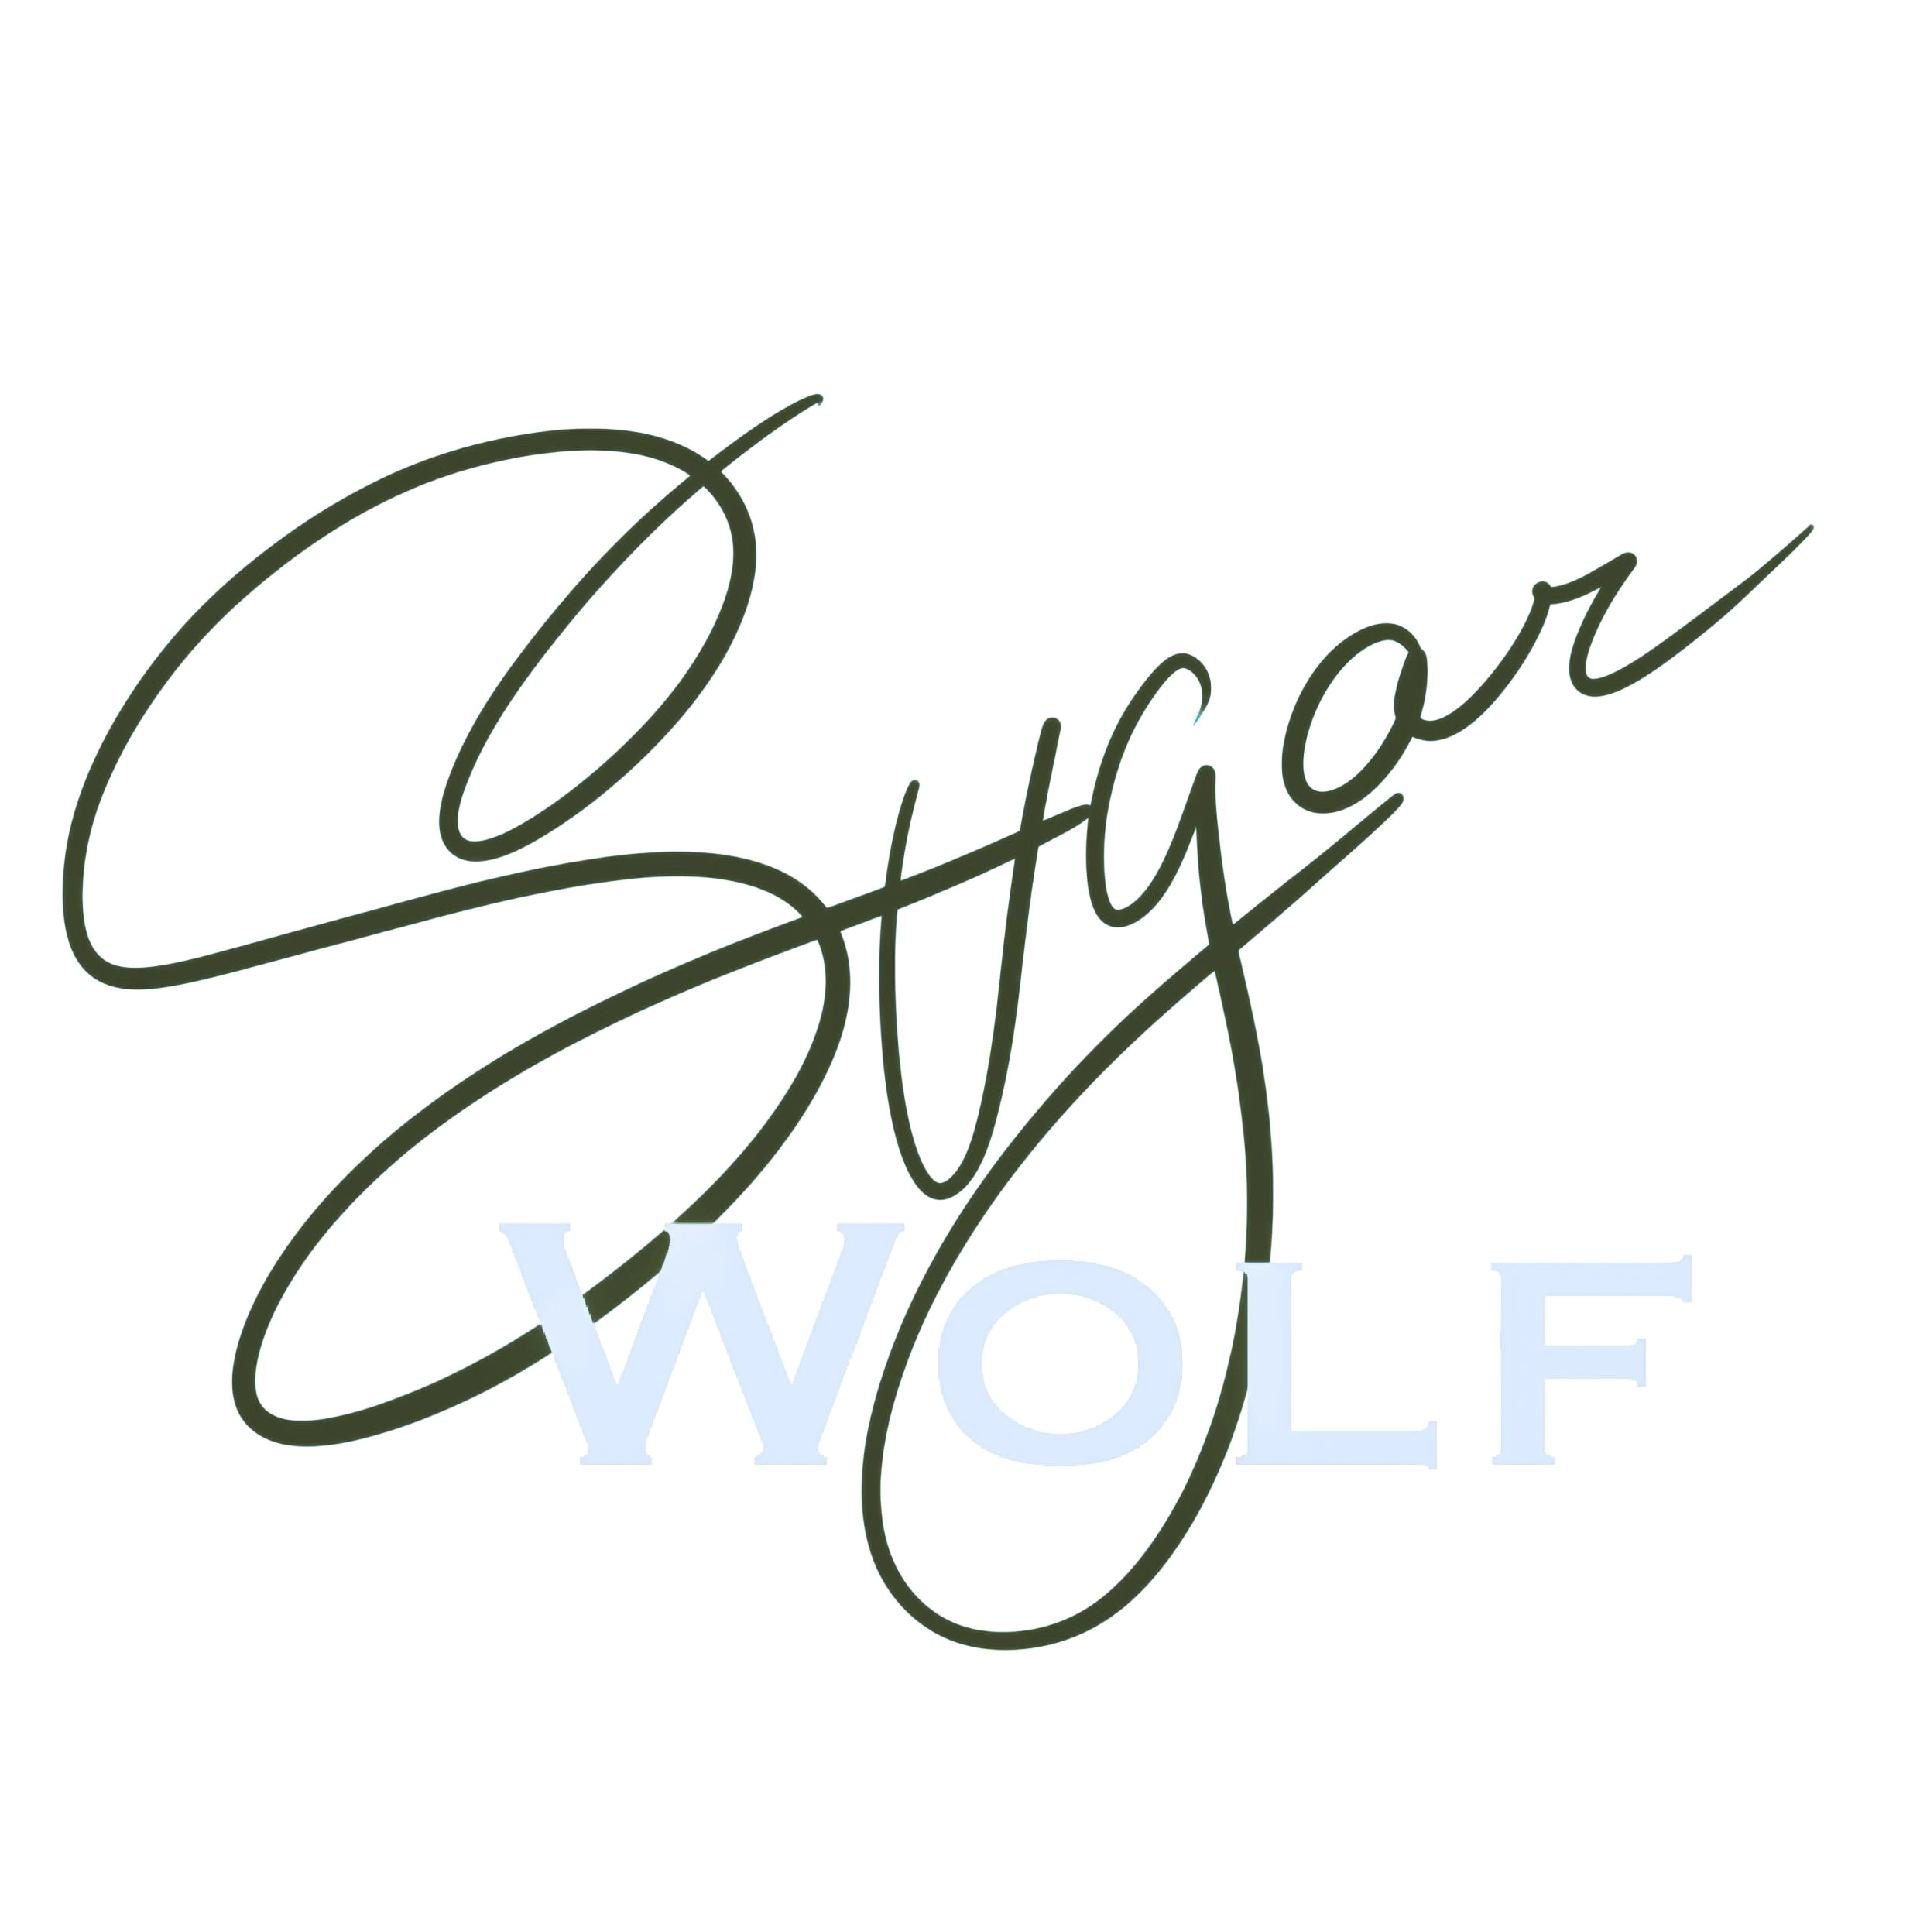 SugarWolf LLC's images